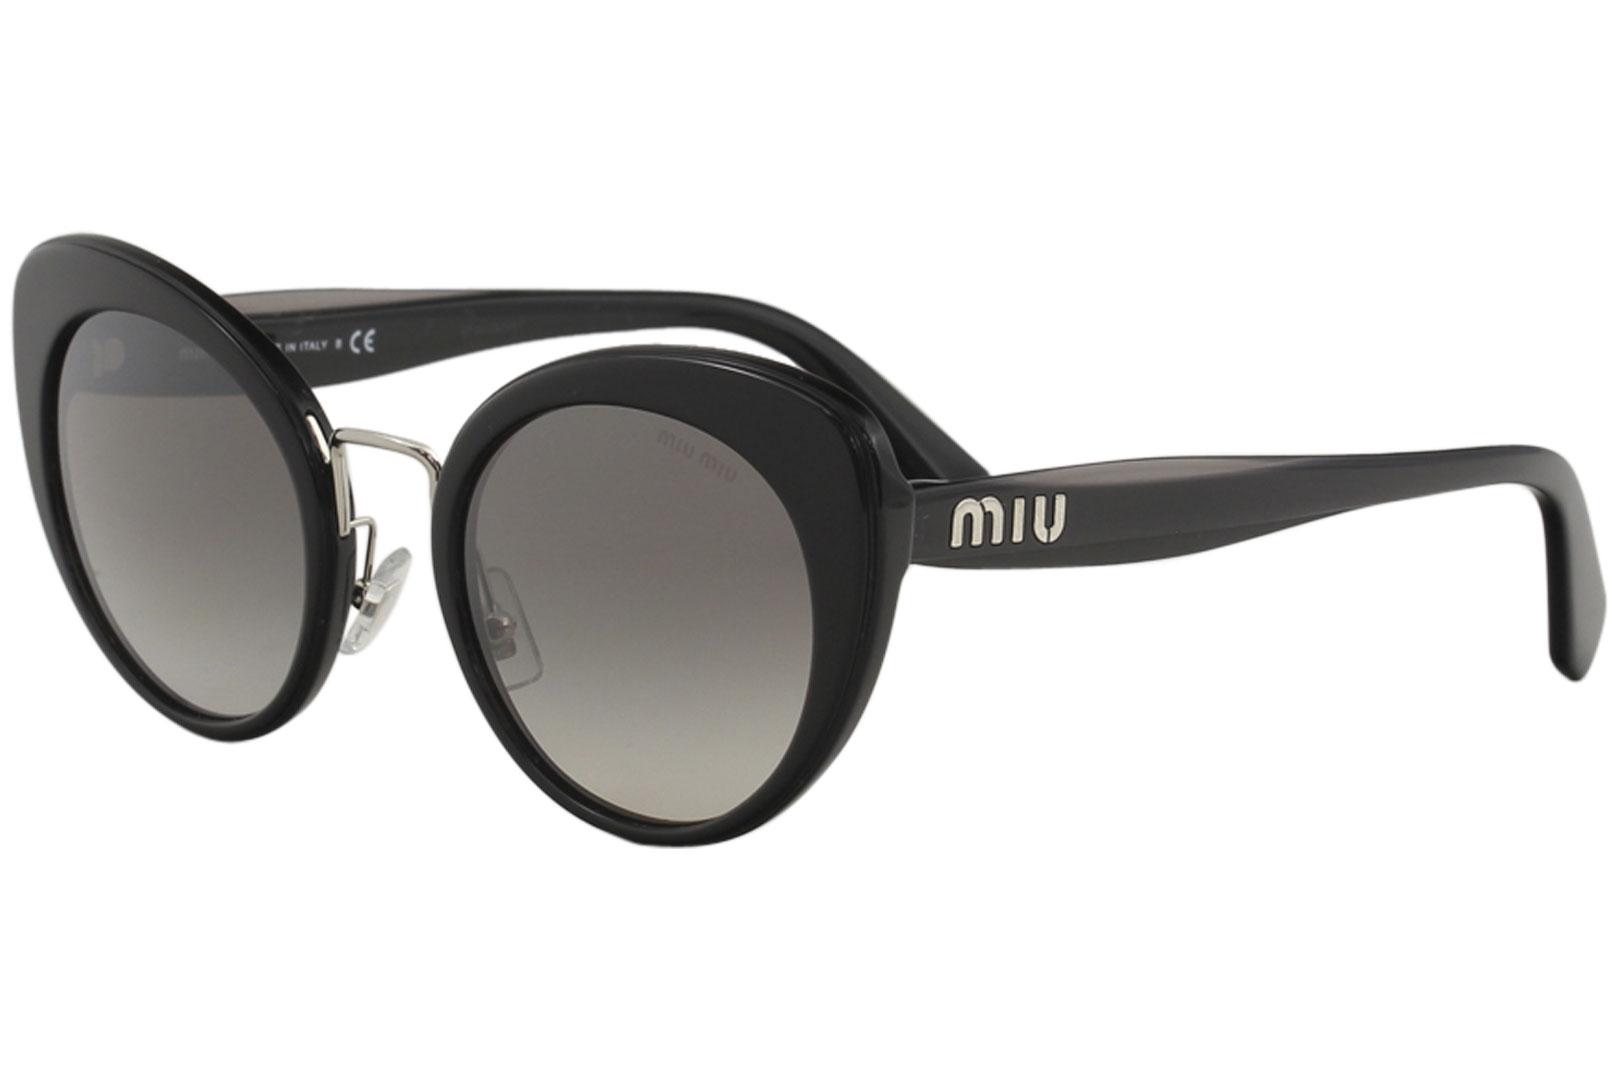 Miu Miu Women's SMU06T SMU/06T Fashion Cat Eye Sunglasses - Black - Lens 53 Bridge 24 B 47.6 ED 55 Temple 140mm